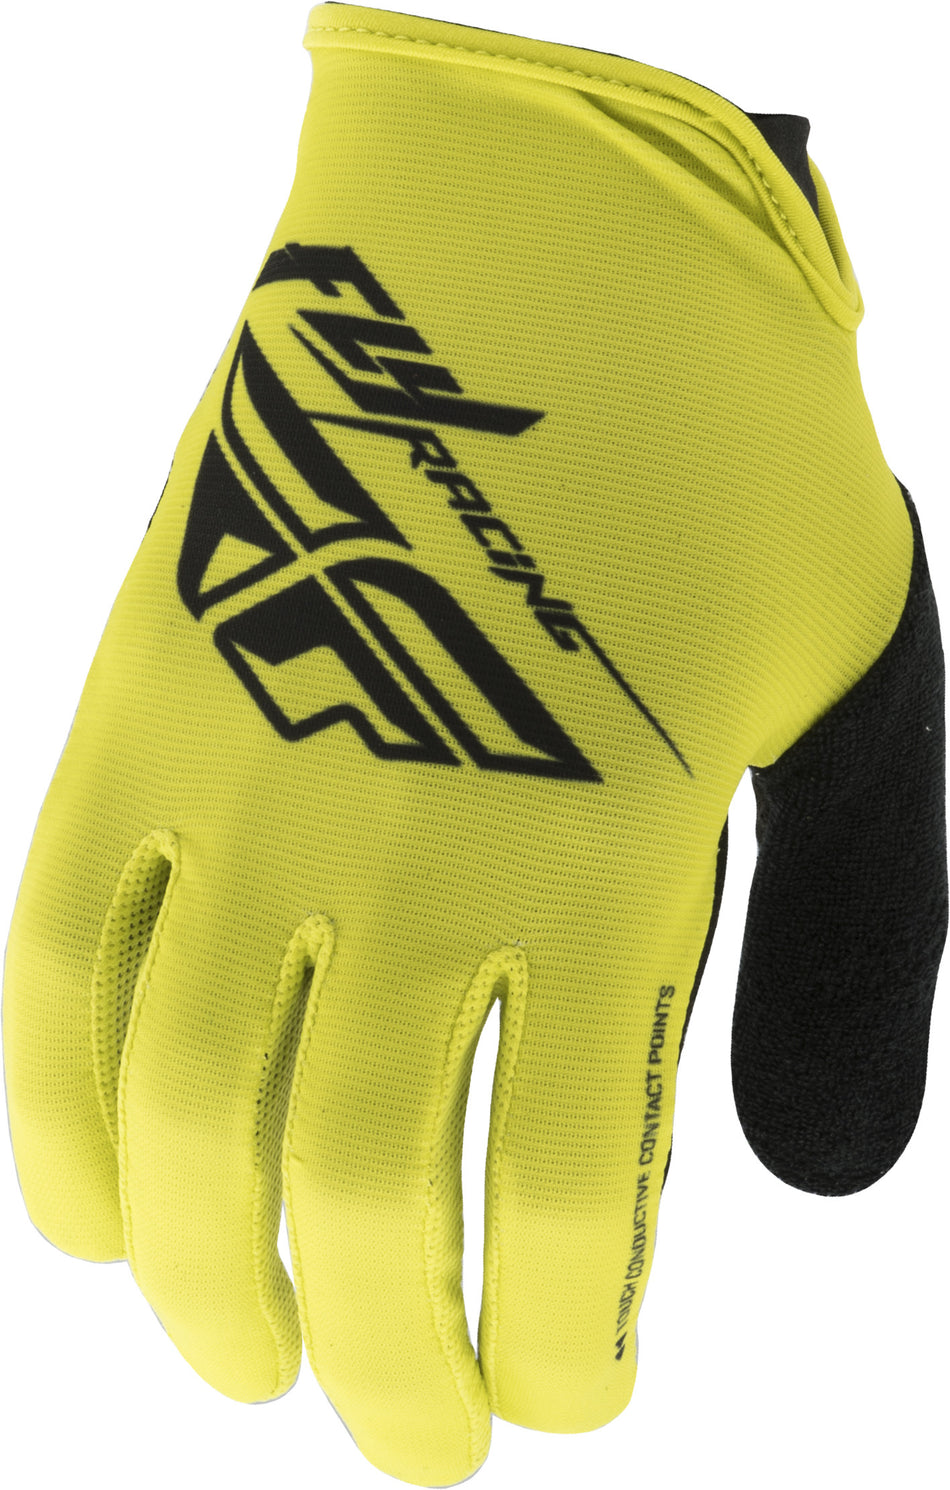 FLY RACING Media Gloves Lime/Black Sz 10 350-09510